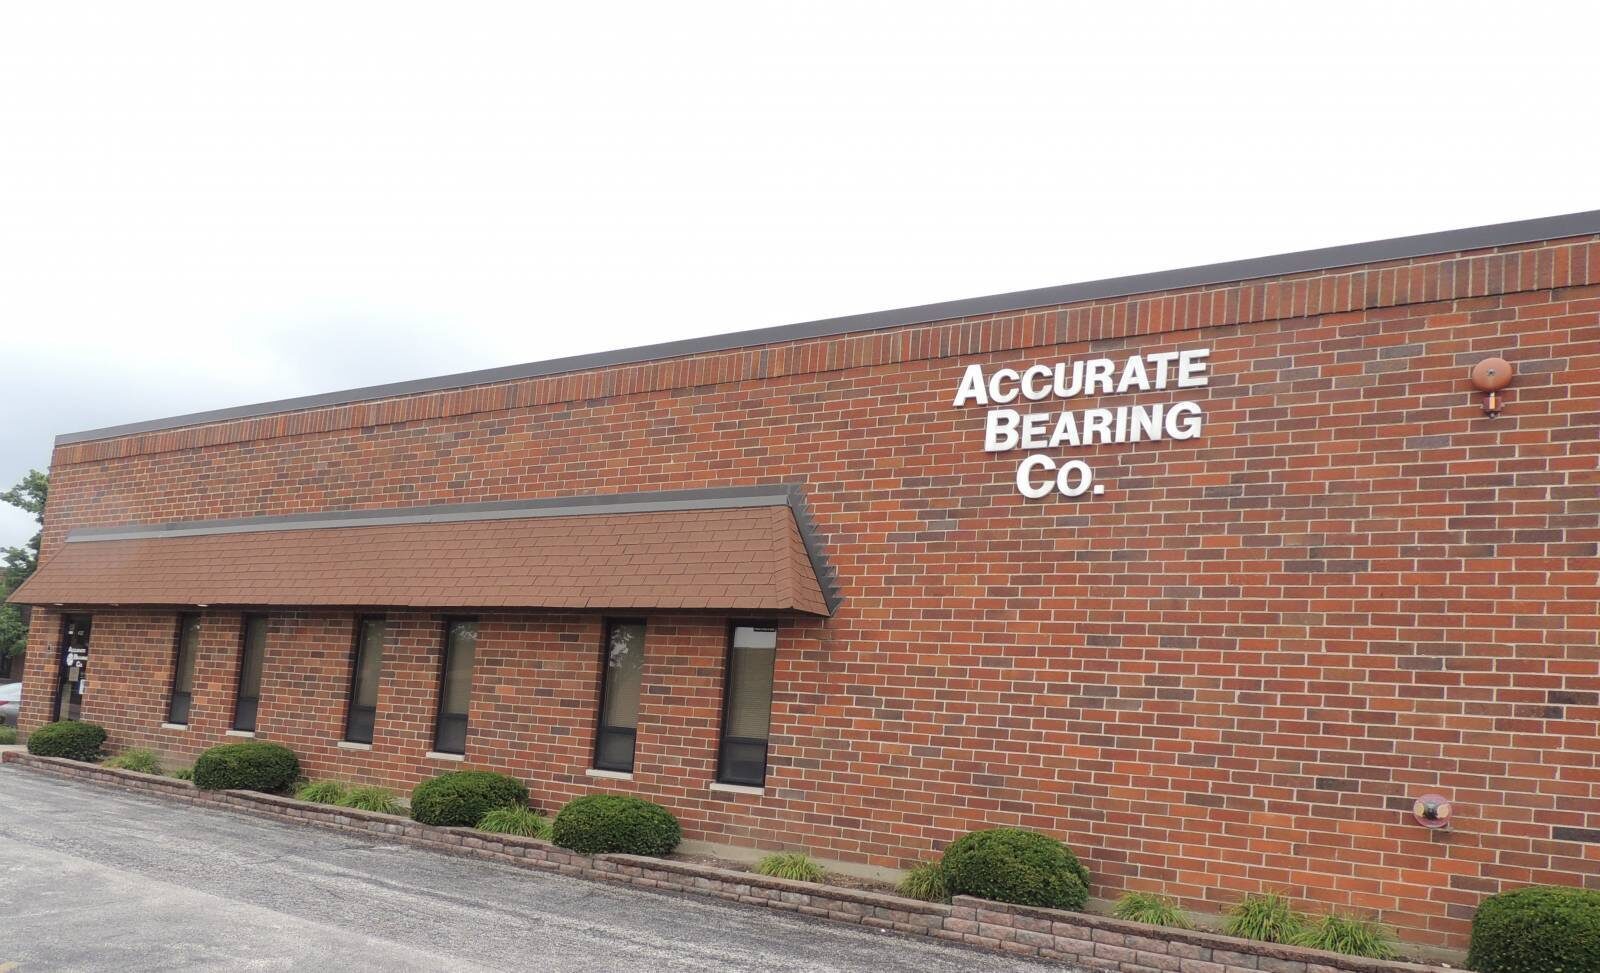 Accurate Bearing Company in Addison, IL near Chicago